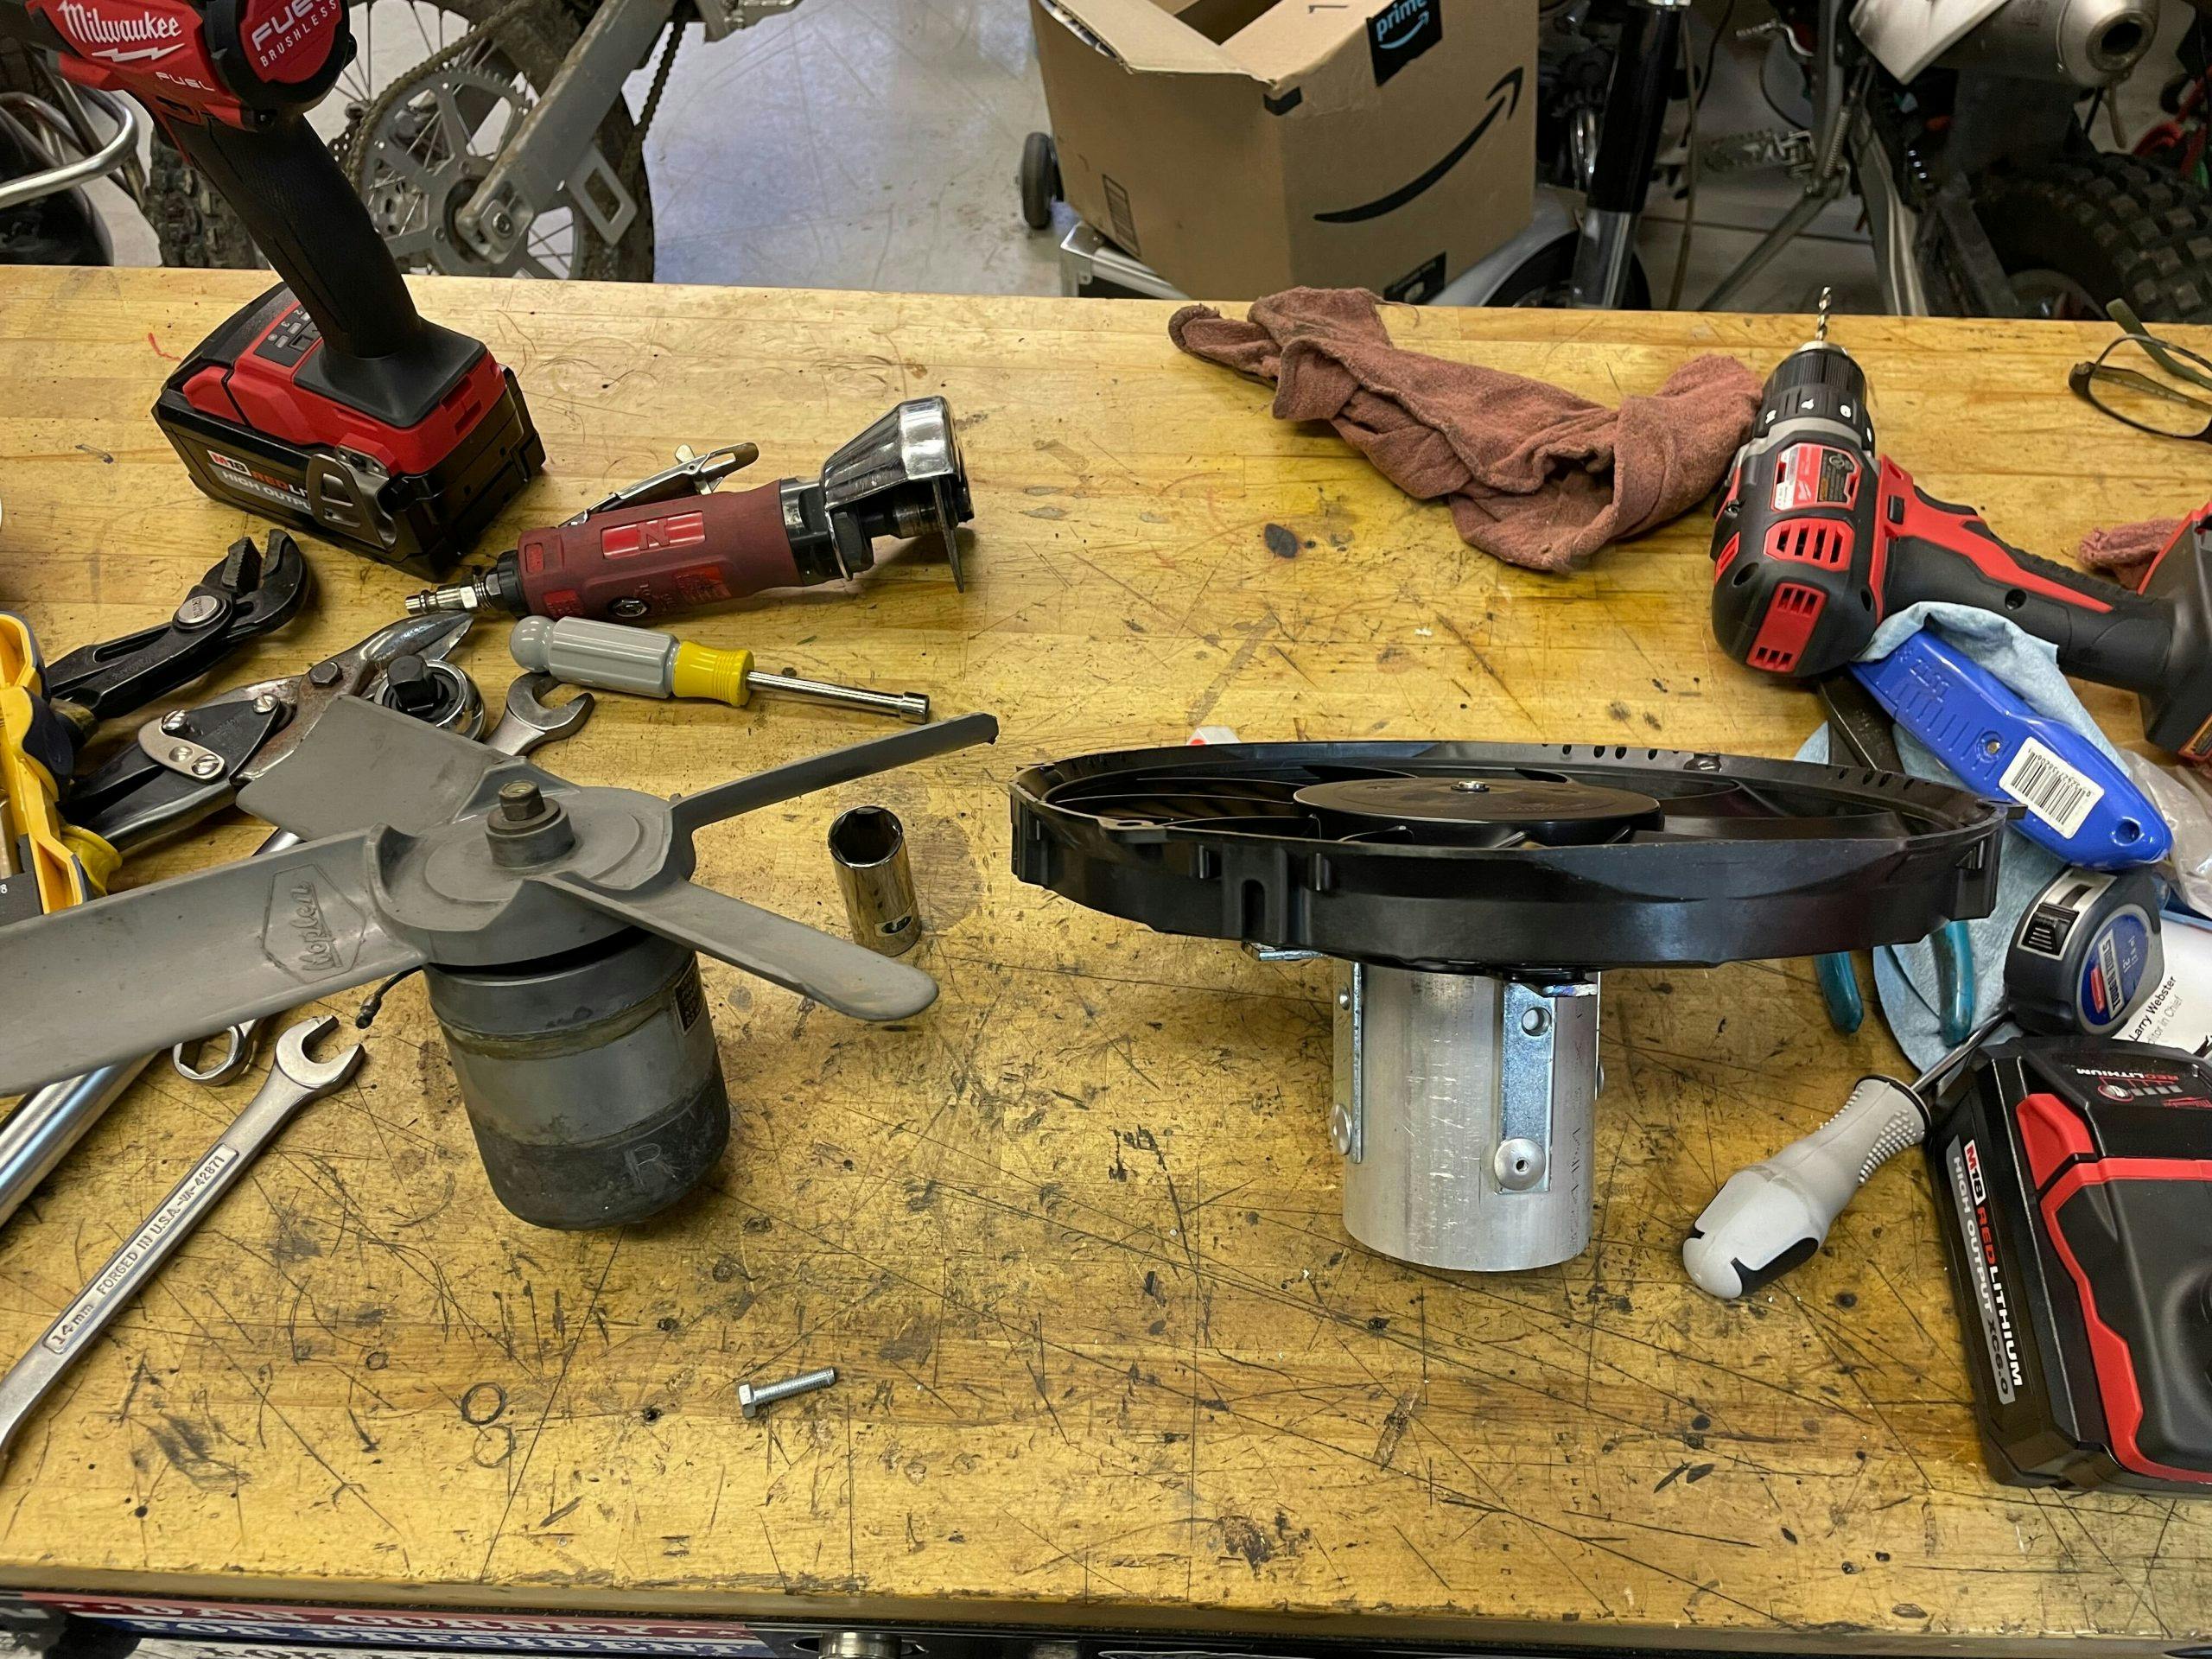 engine components on worktop